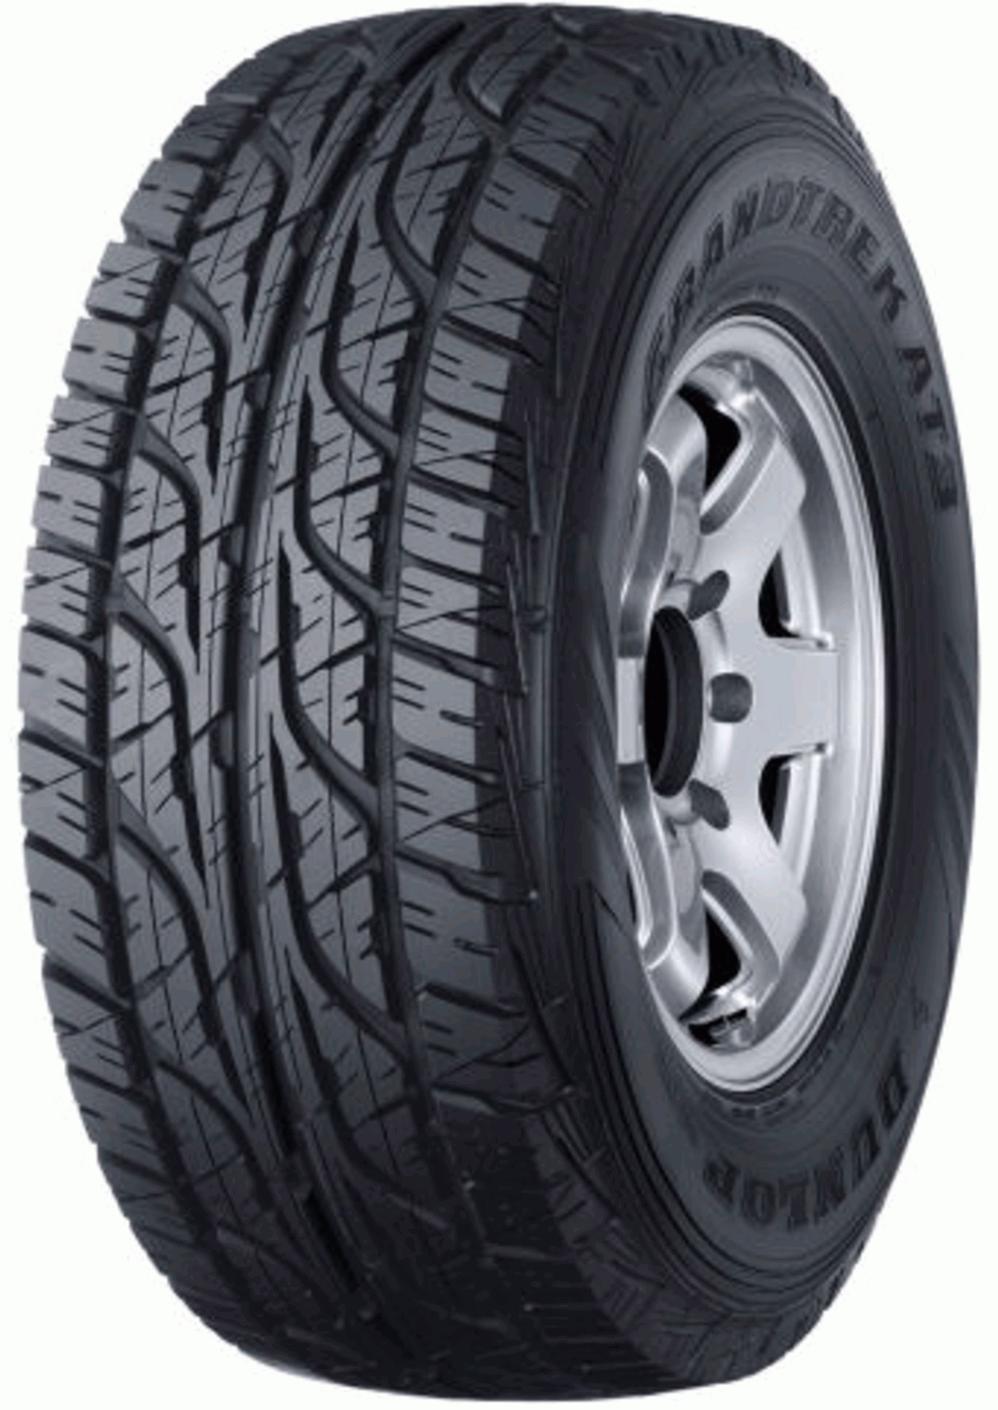 https://www.tyrereviews.com/images/tyres/Dunlop-Grandtrek-AT3.jpg